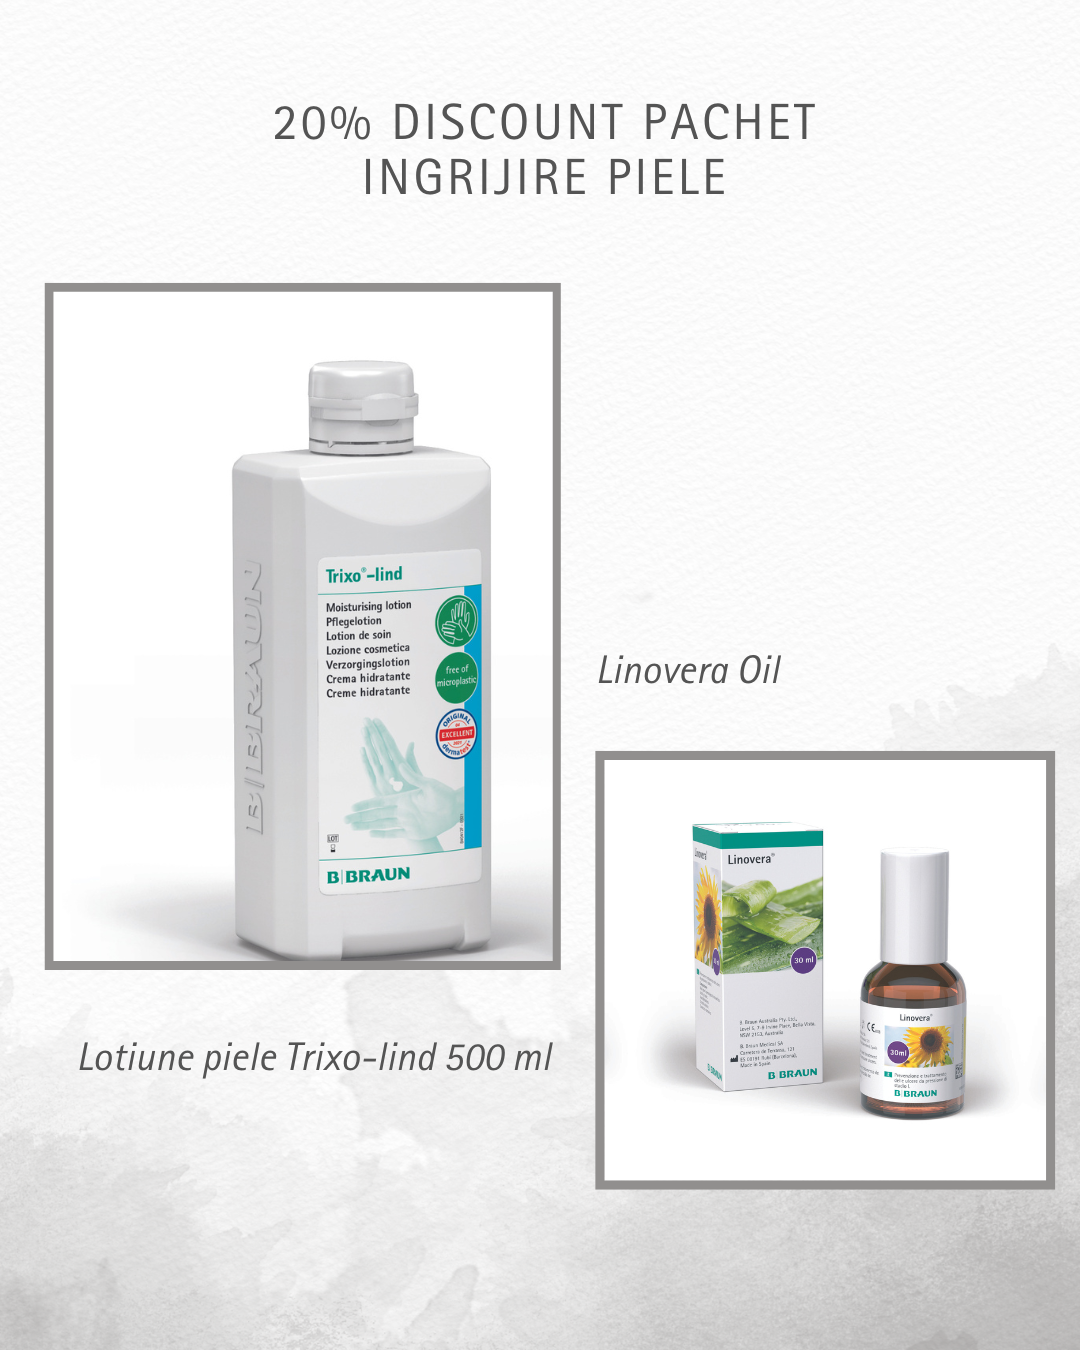 20% Discount pachet lotiune Trixo-lind si Linovera spray